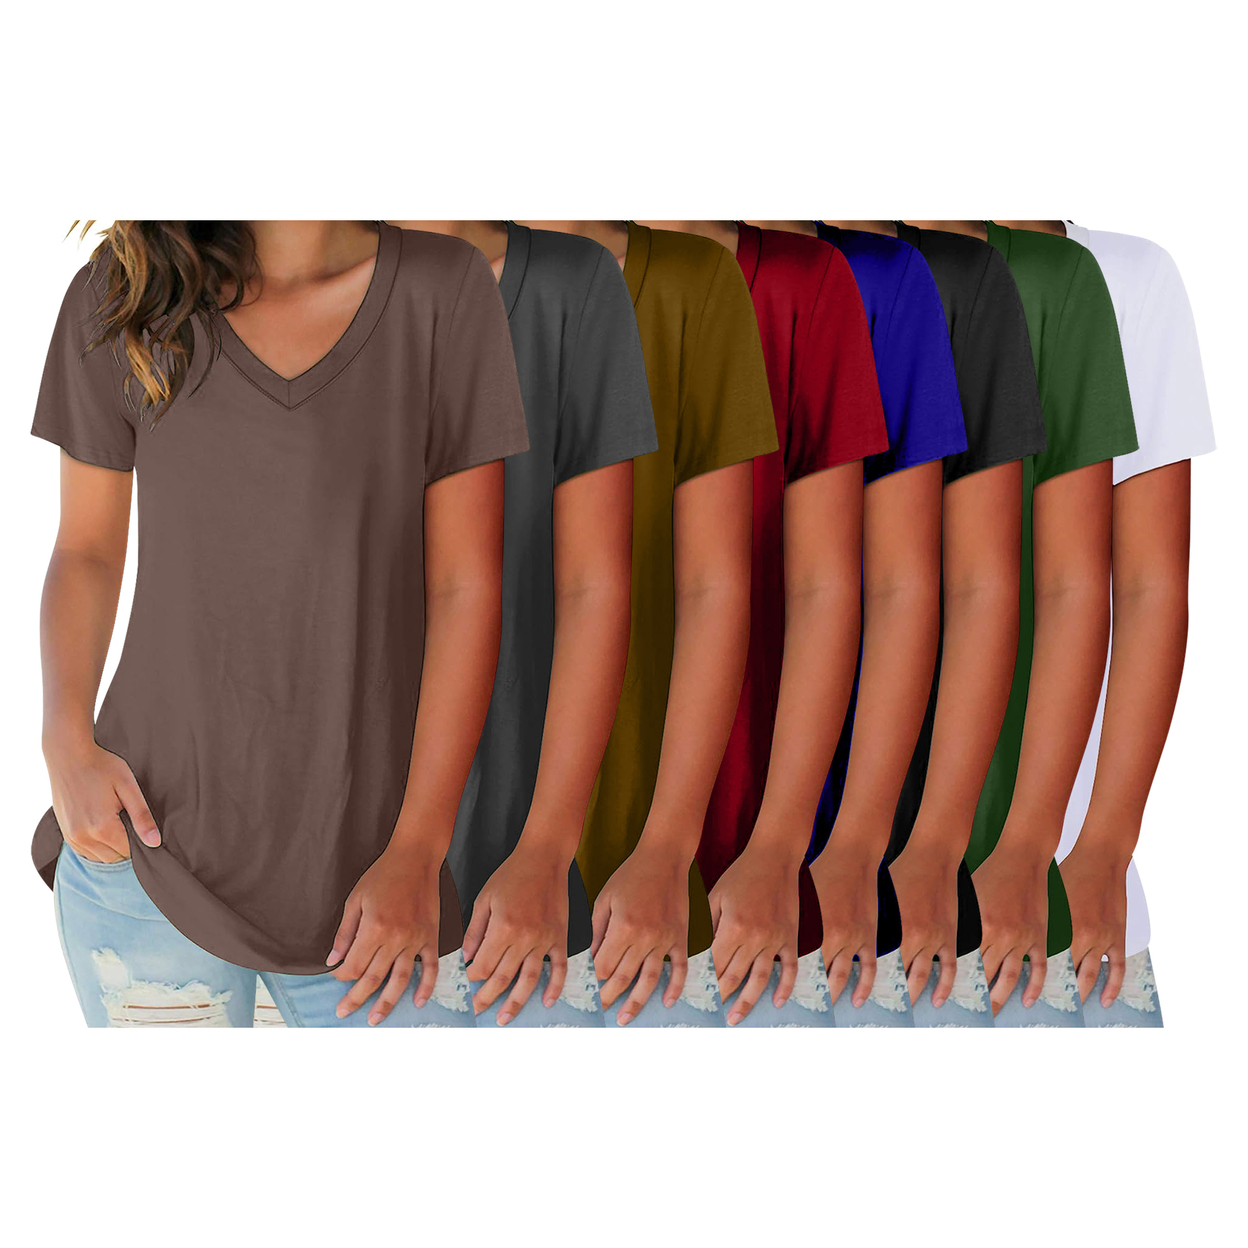 2-Pack: Women's Ultra Soft Smooth Cotton Blend Basic V-Neck Short Sleeve Shirts - Black & Navy, X-large